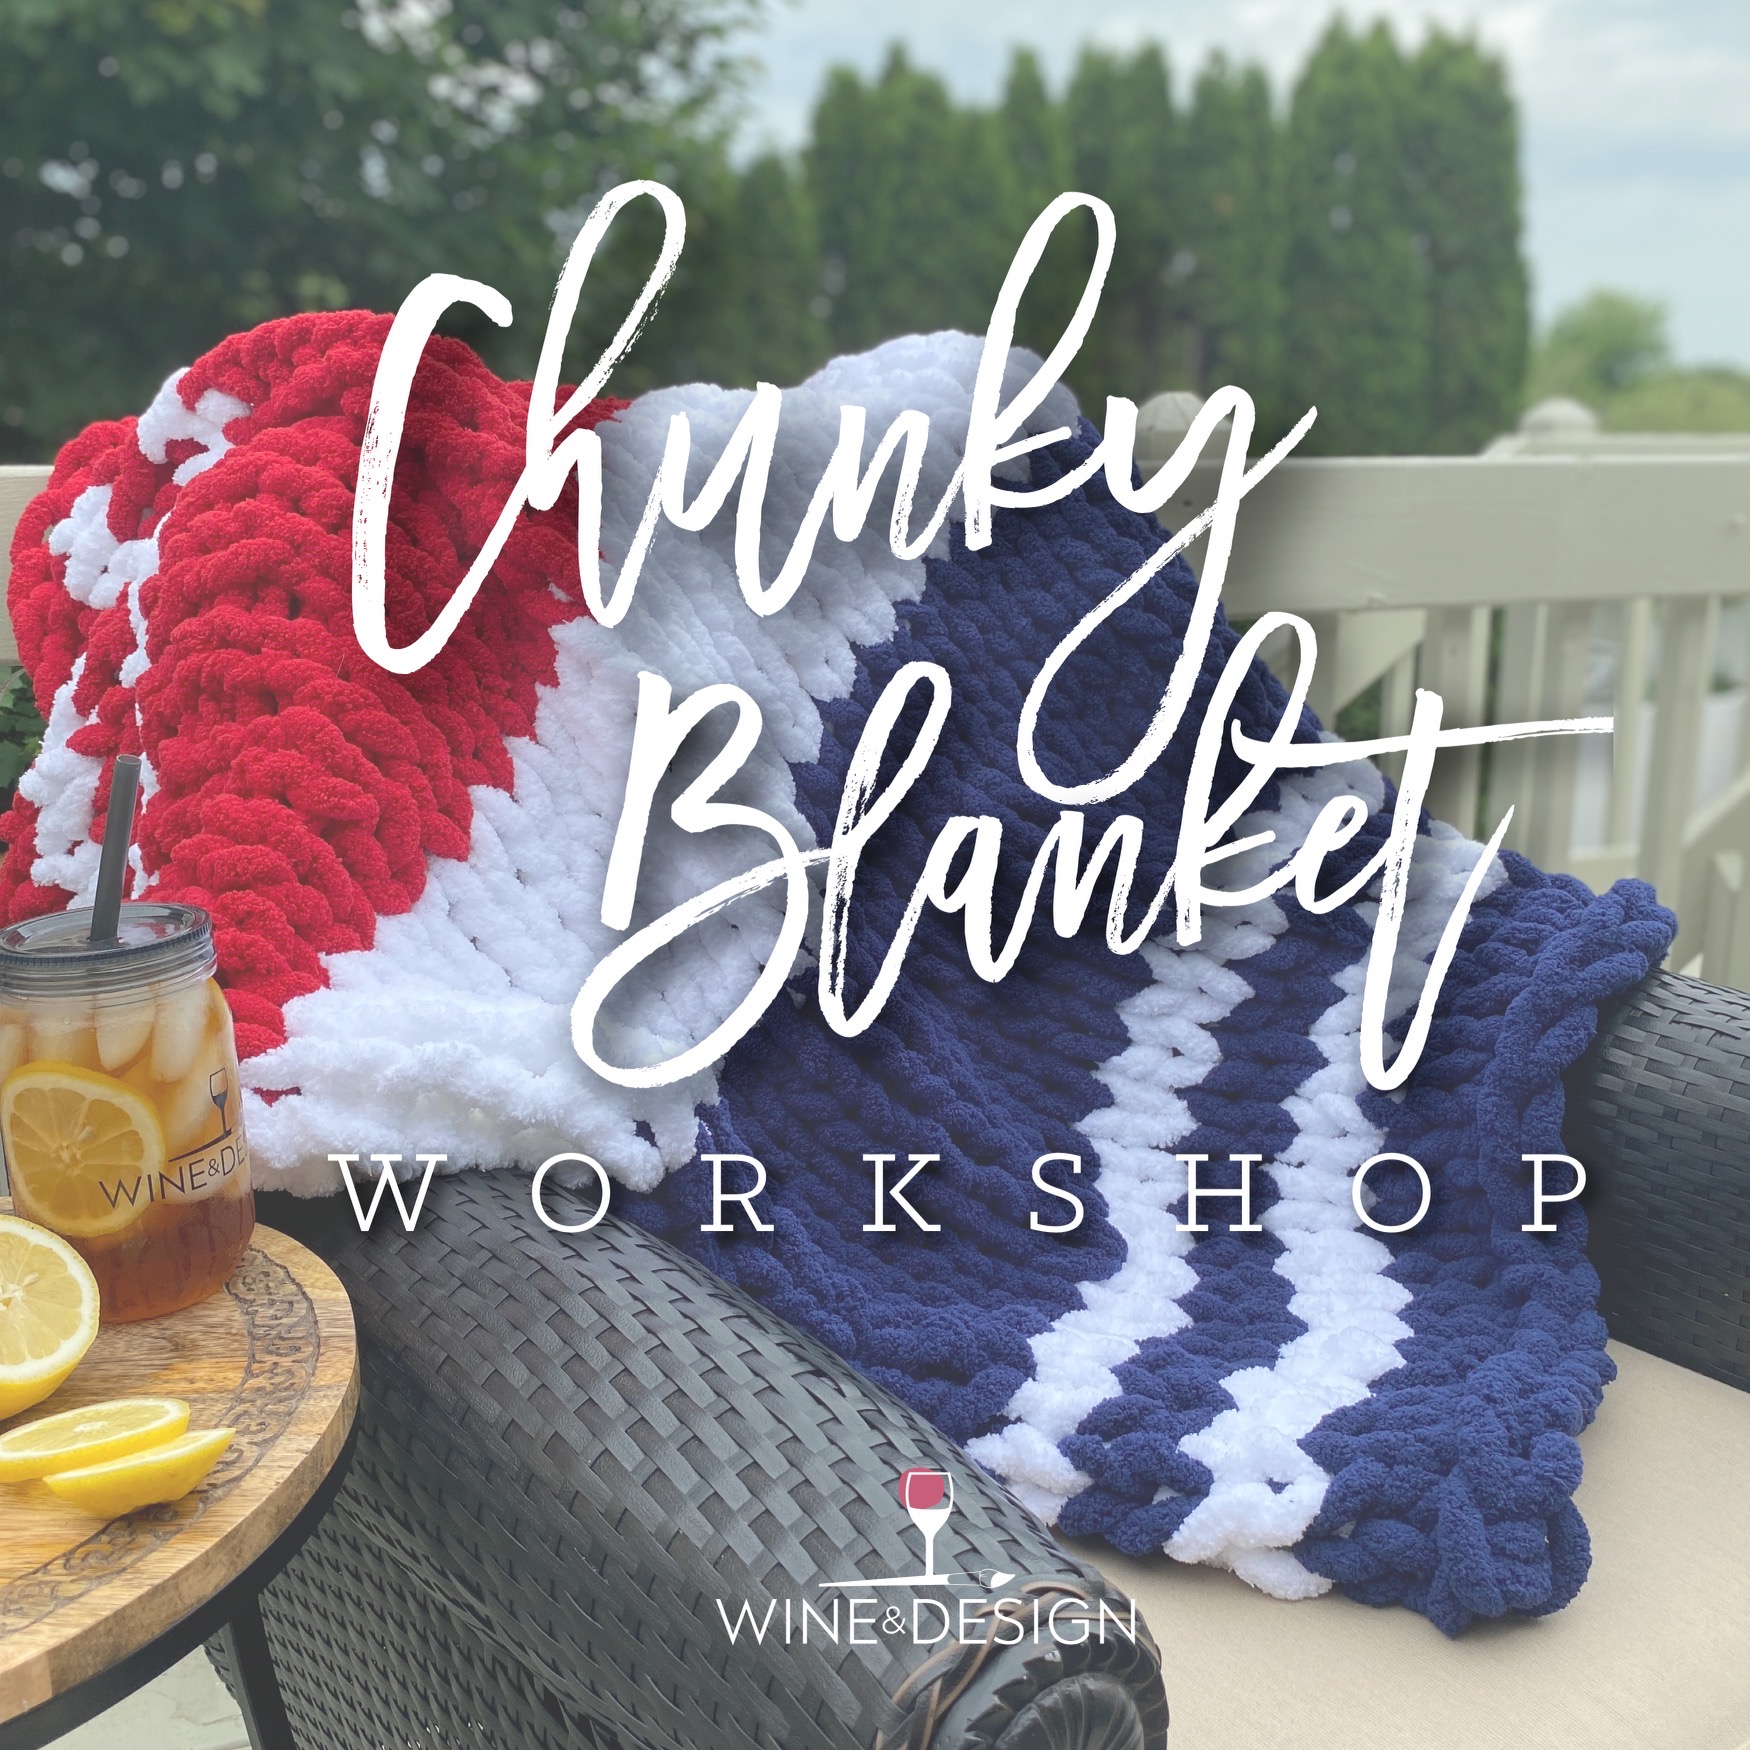 It's Back! "Chunky Blanket Workshop!" Adult Studio!